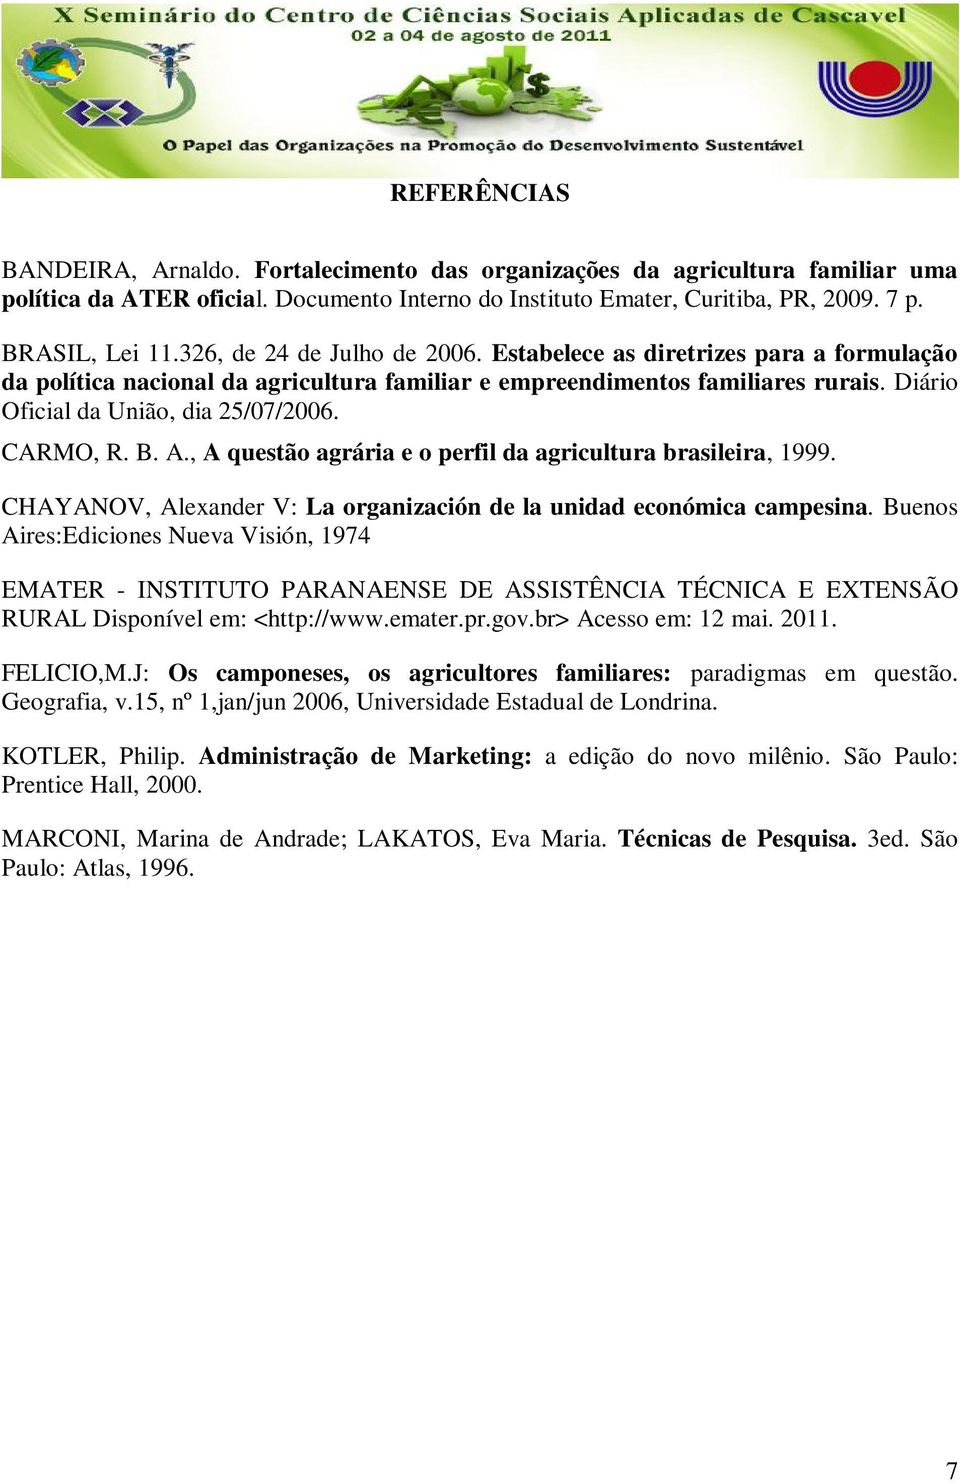 CARMO, R. B. A., A questão agrária e o perfil da agricultura brasileira, 1999. CHAYANOV, Alexander V: La organización de la unidad económica campesina.